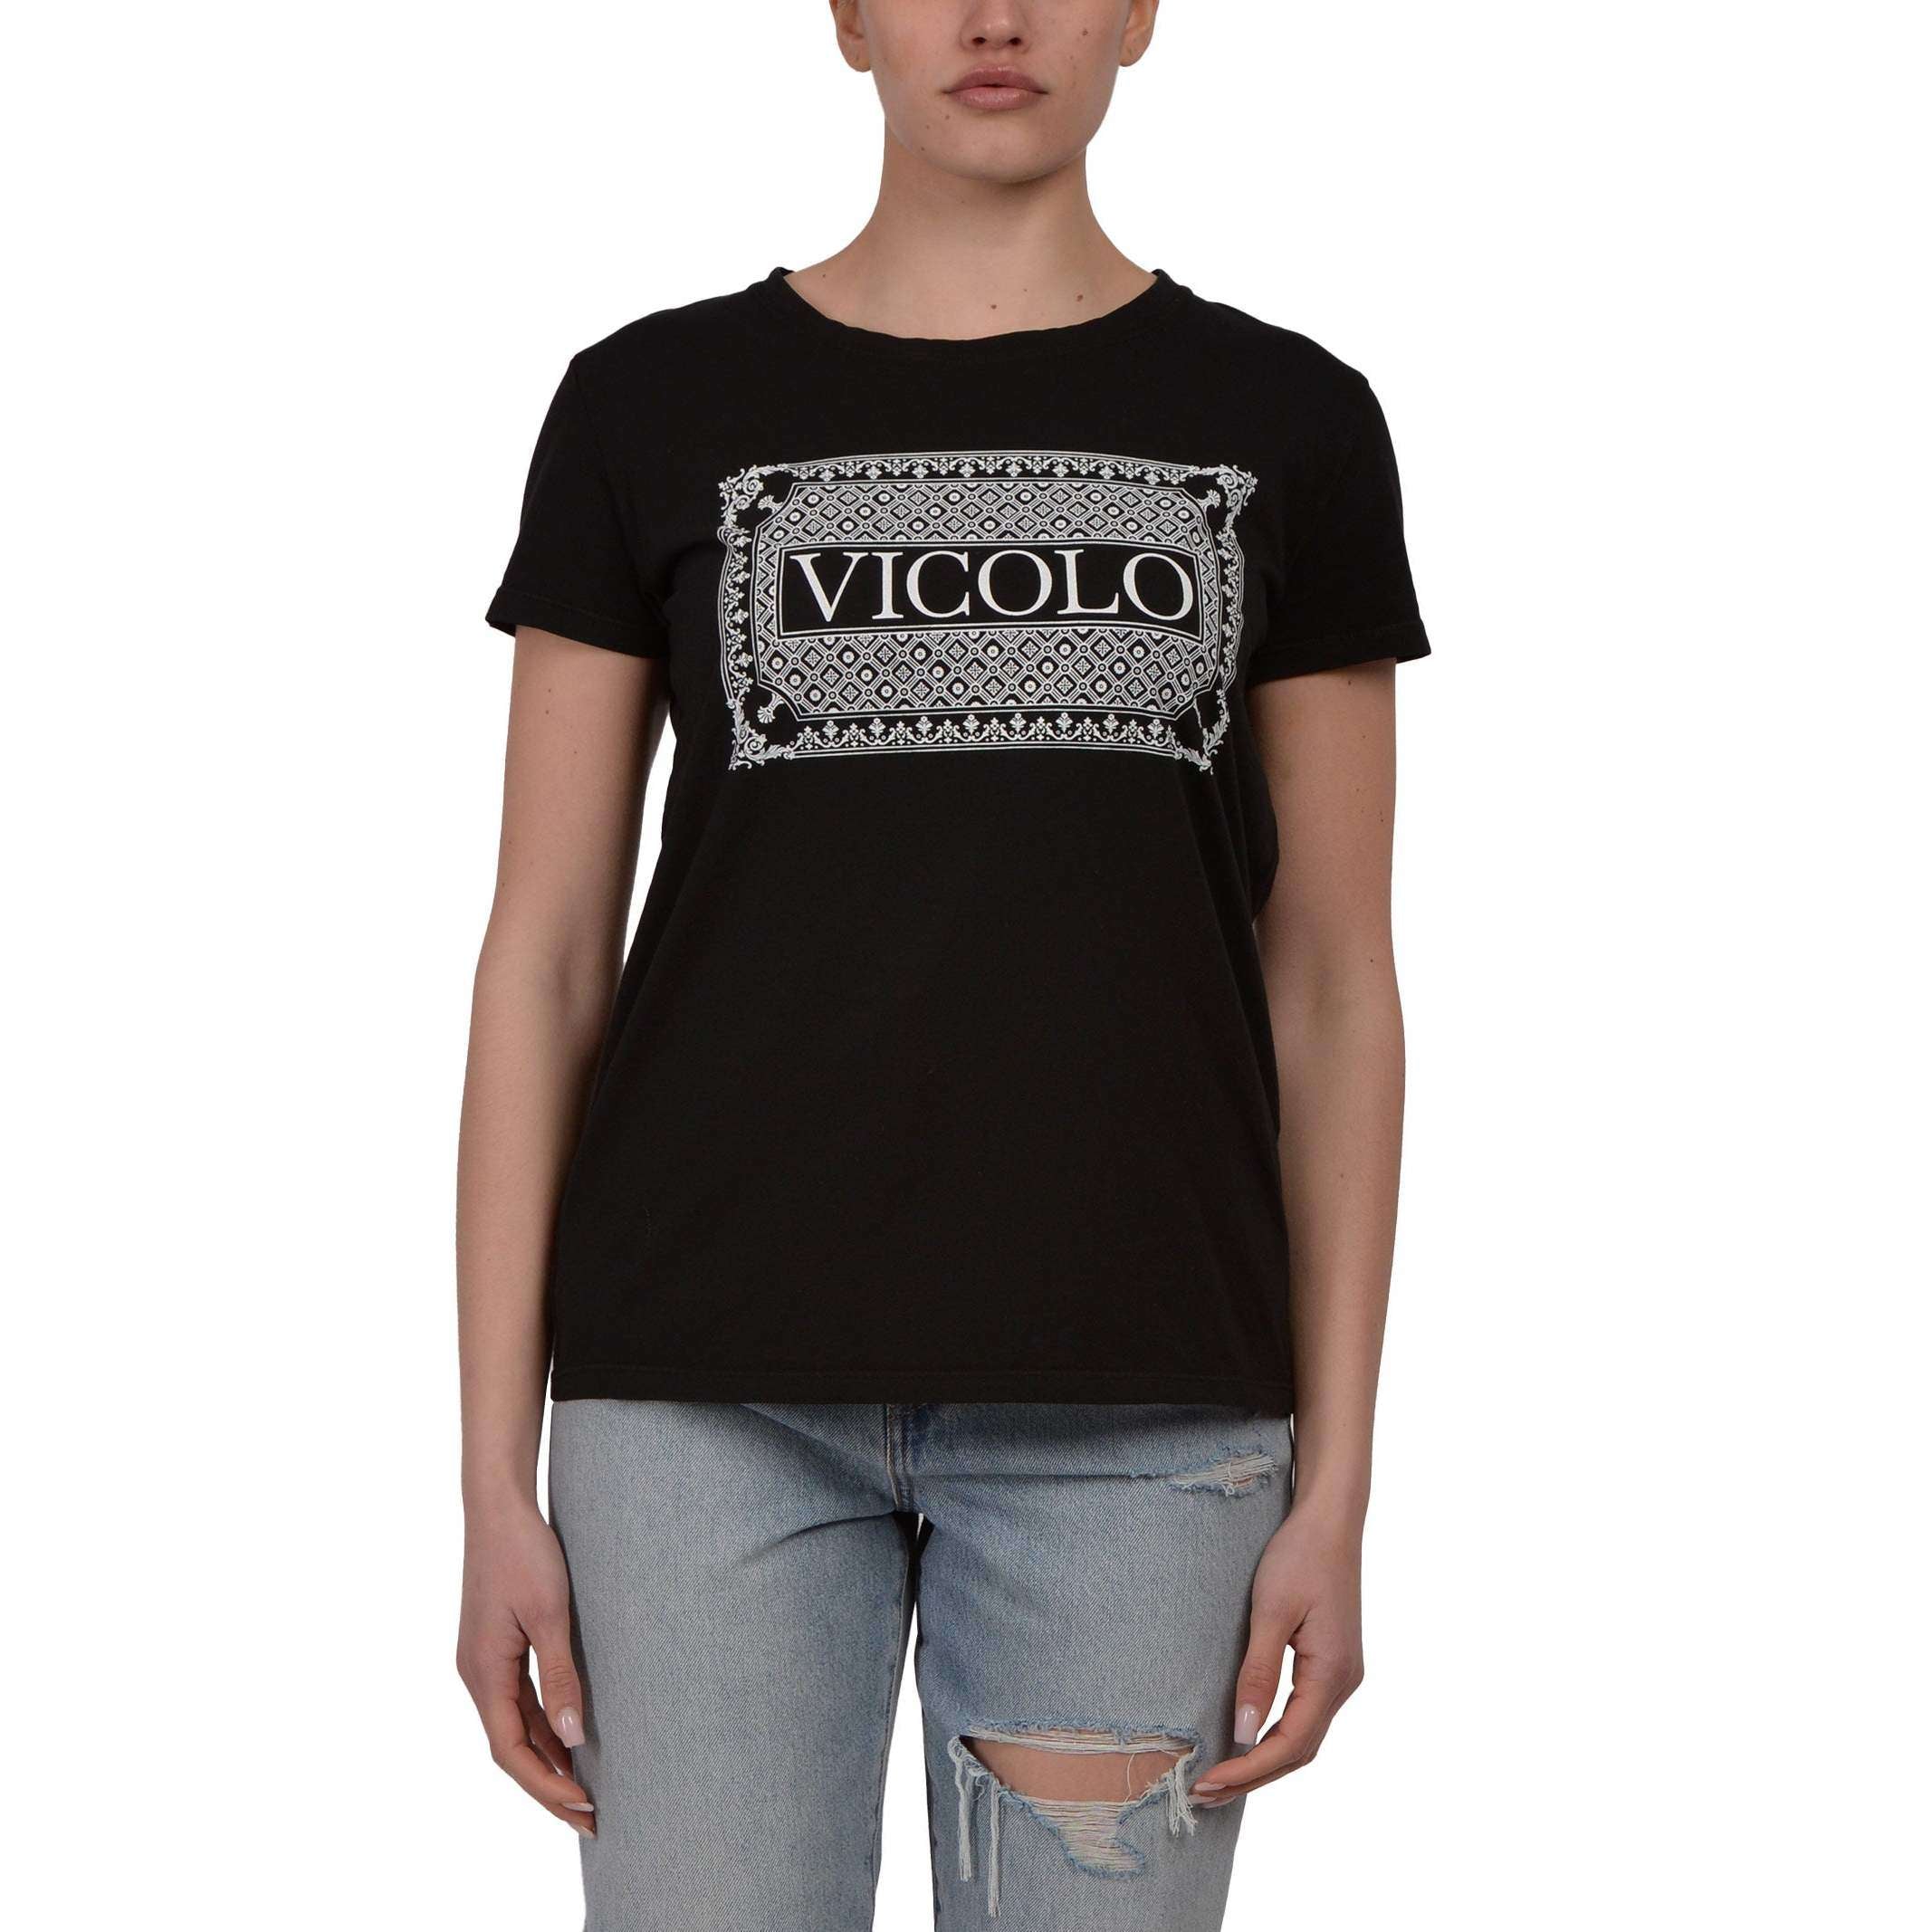 Vicolo Donna T-shirt RY0092